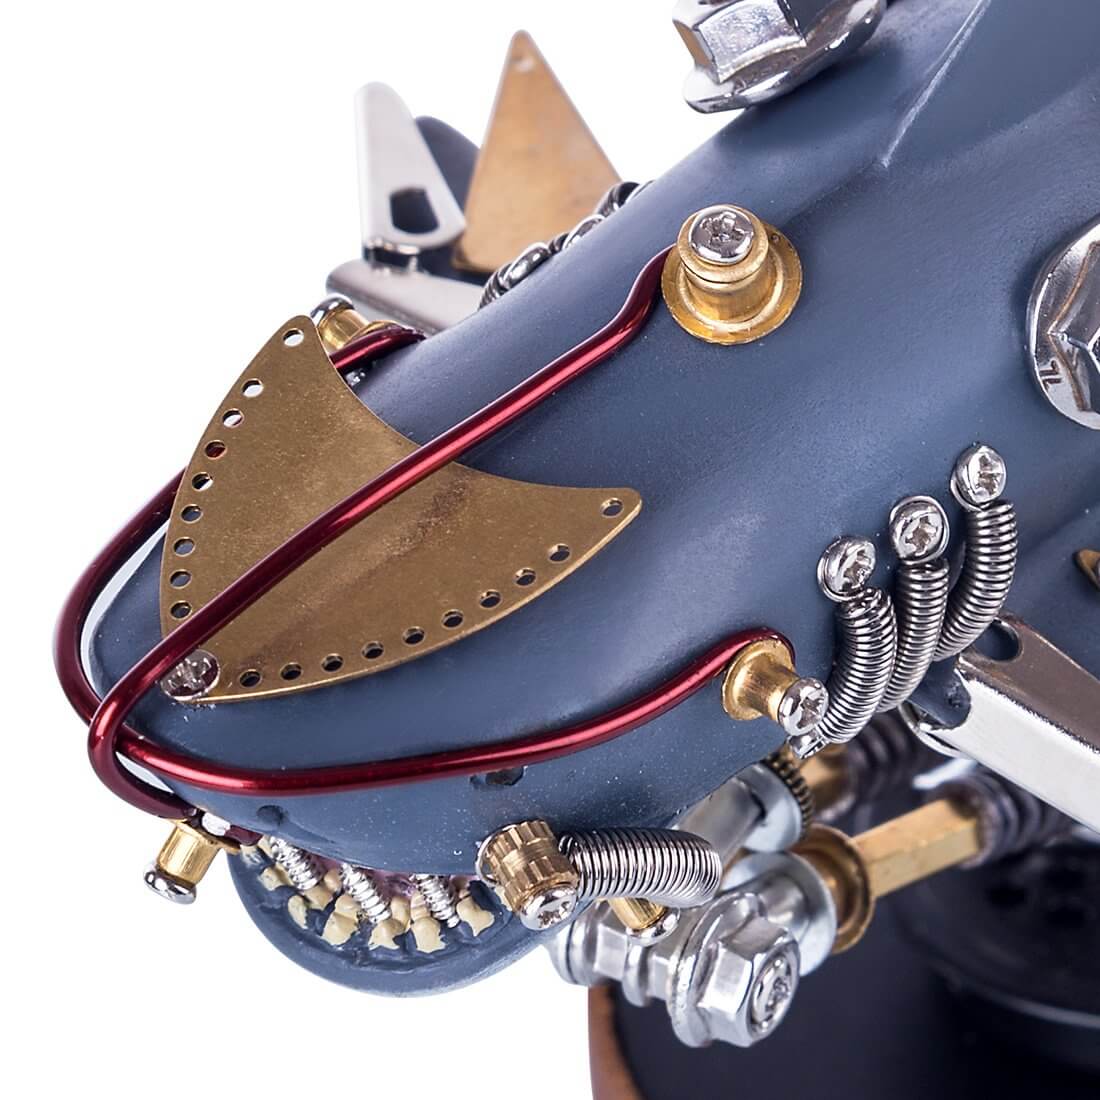 217Pcs 3D Assembly DIY Metal Mechanical Shark Variant Beast Puzzle Model